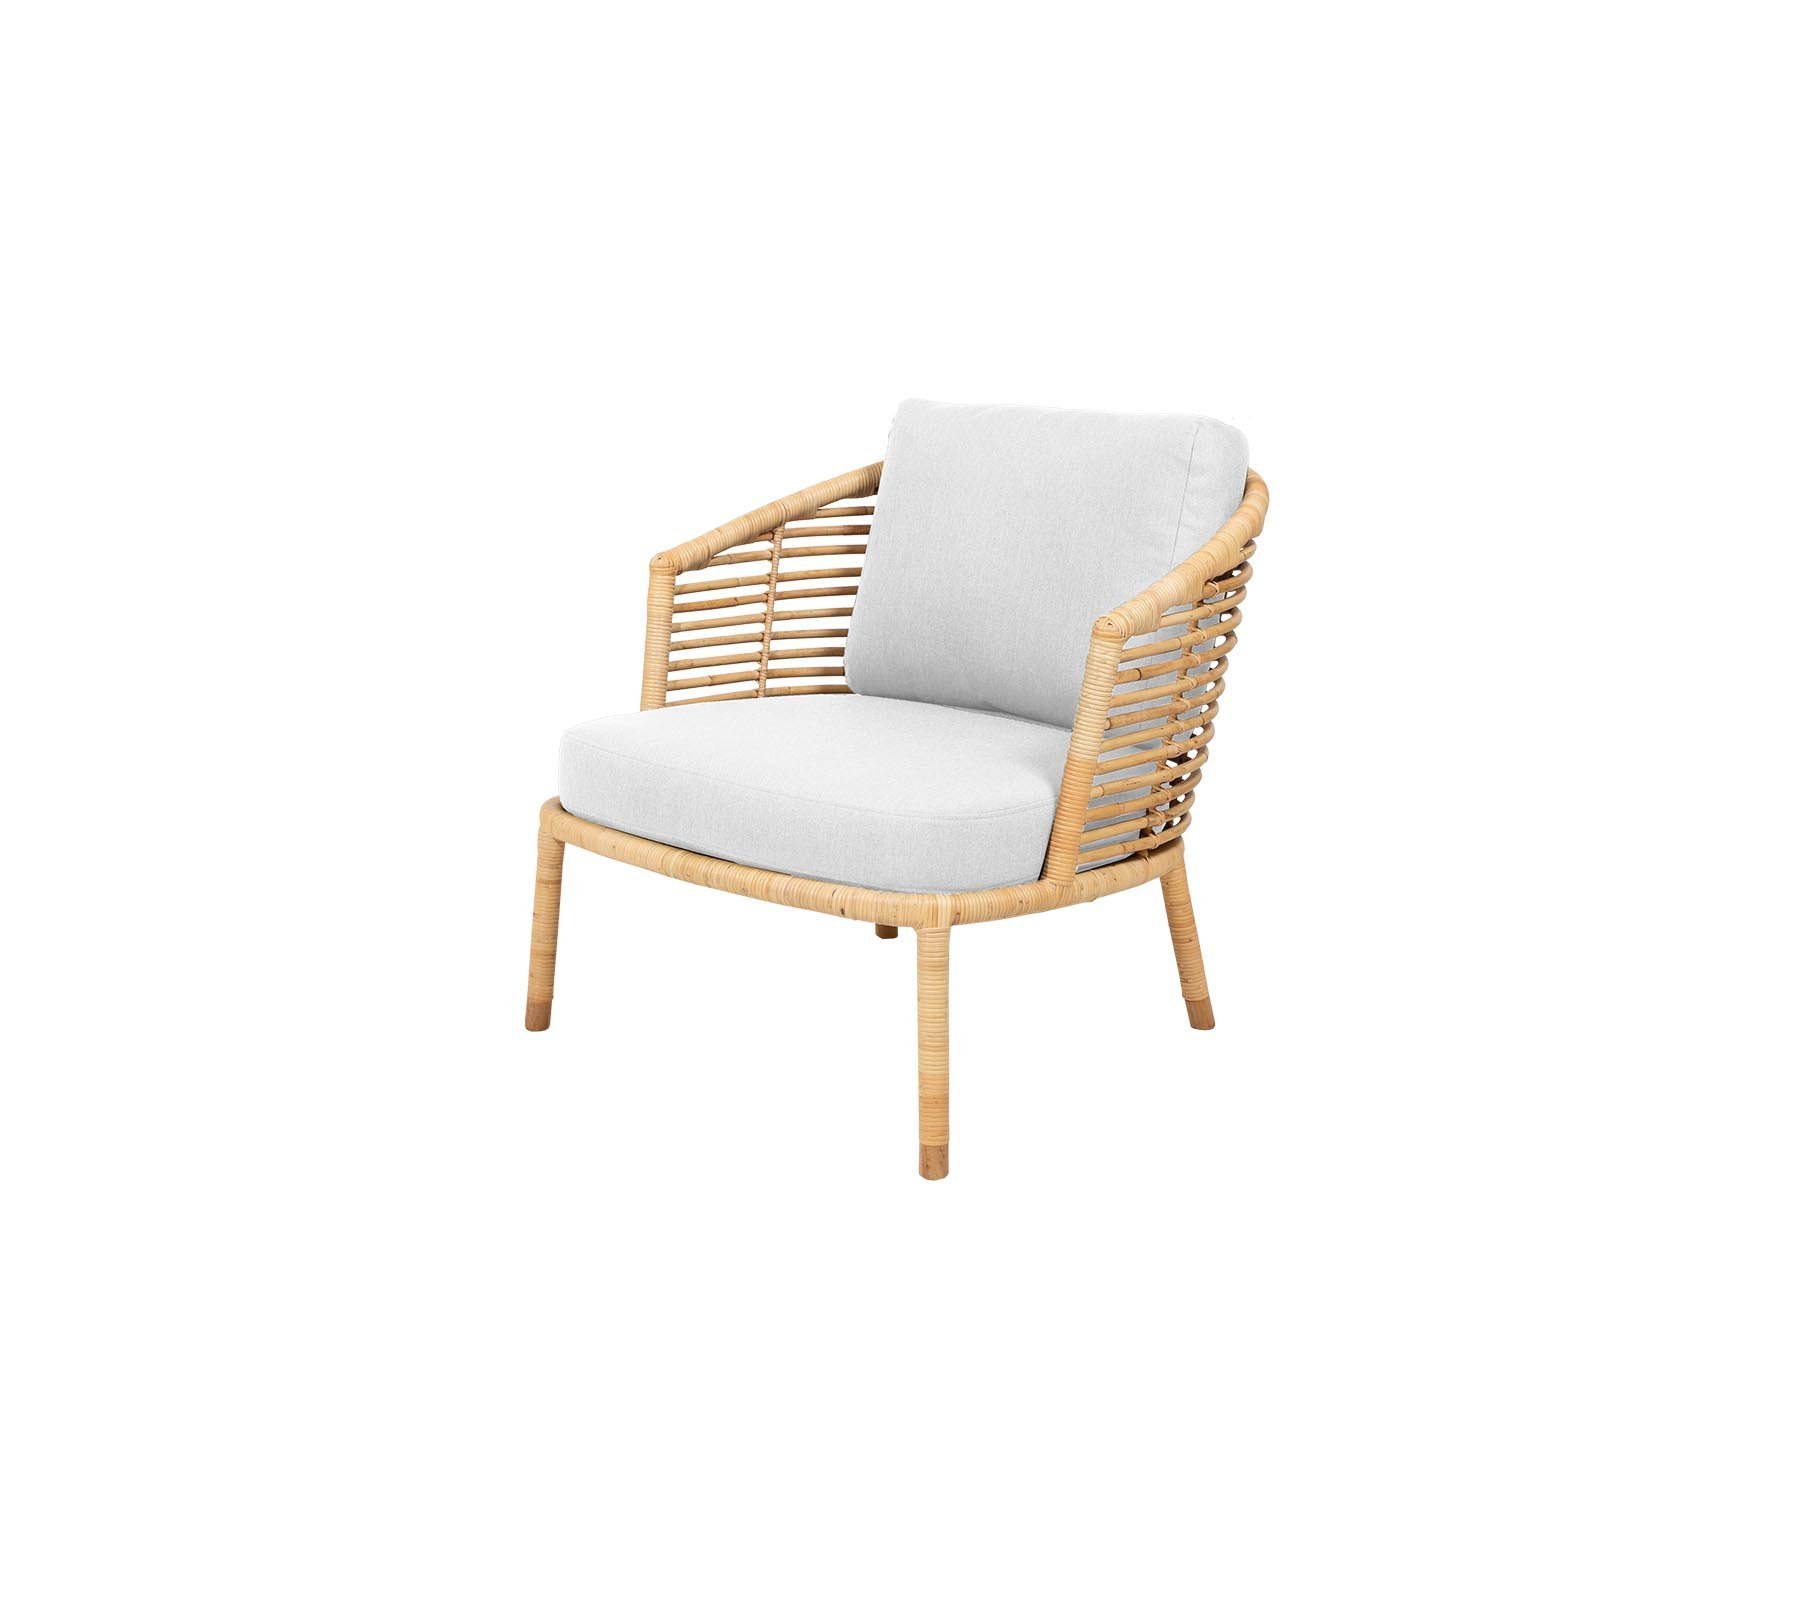 Sense Lounge Chair from Cane-line, designed by Foersom & Hiort-Lorenzen MDD